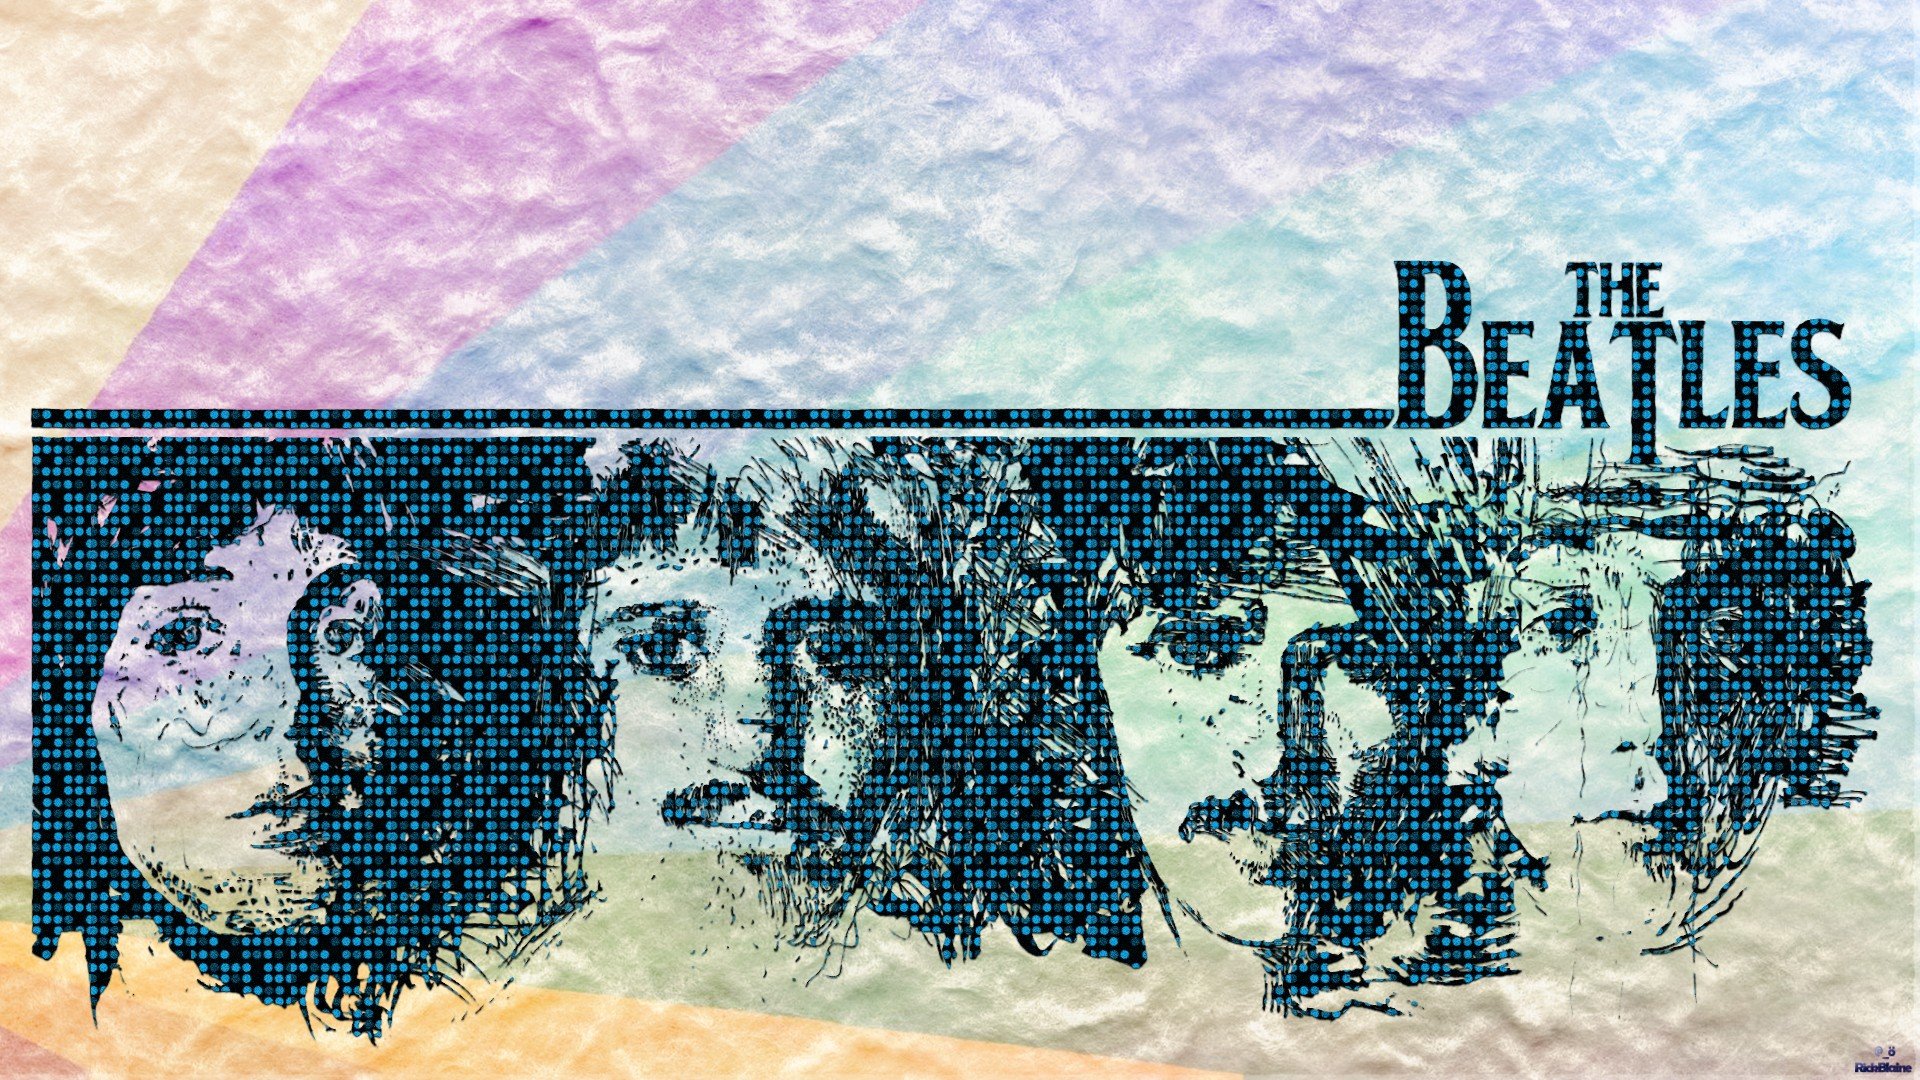 Music Pop The Beatles Rock Music Digital Art Artwork Fan Art Rock Band Wallpapers Hd Desktop And Mobile Backgrounds